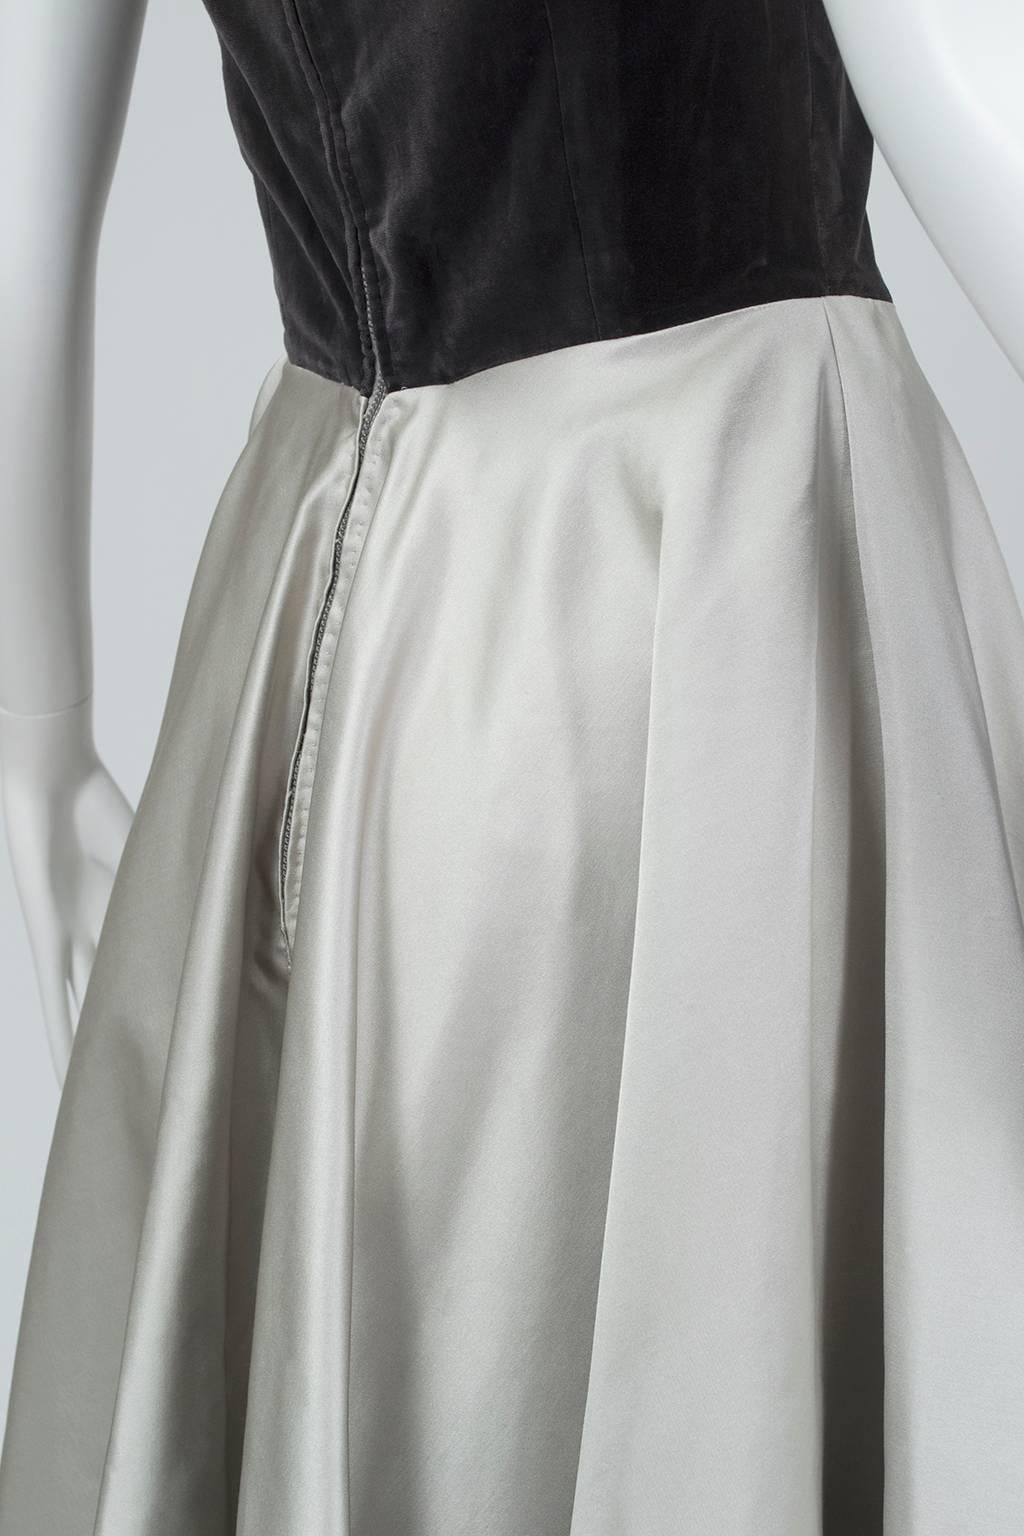 Bespoke Silver and Gray Duchess Satin Strapless Ball Gown, Paris - Medium, 1950s 3